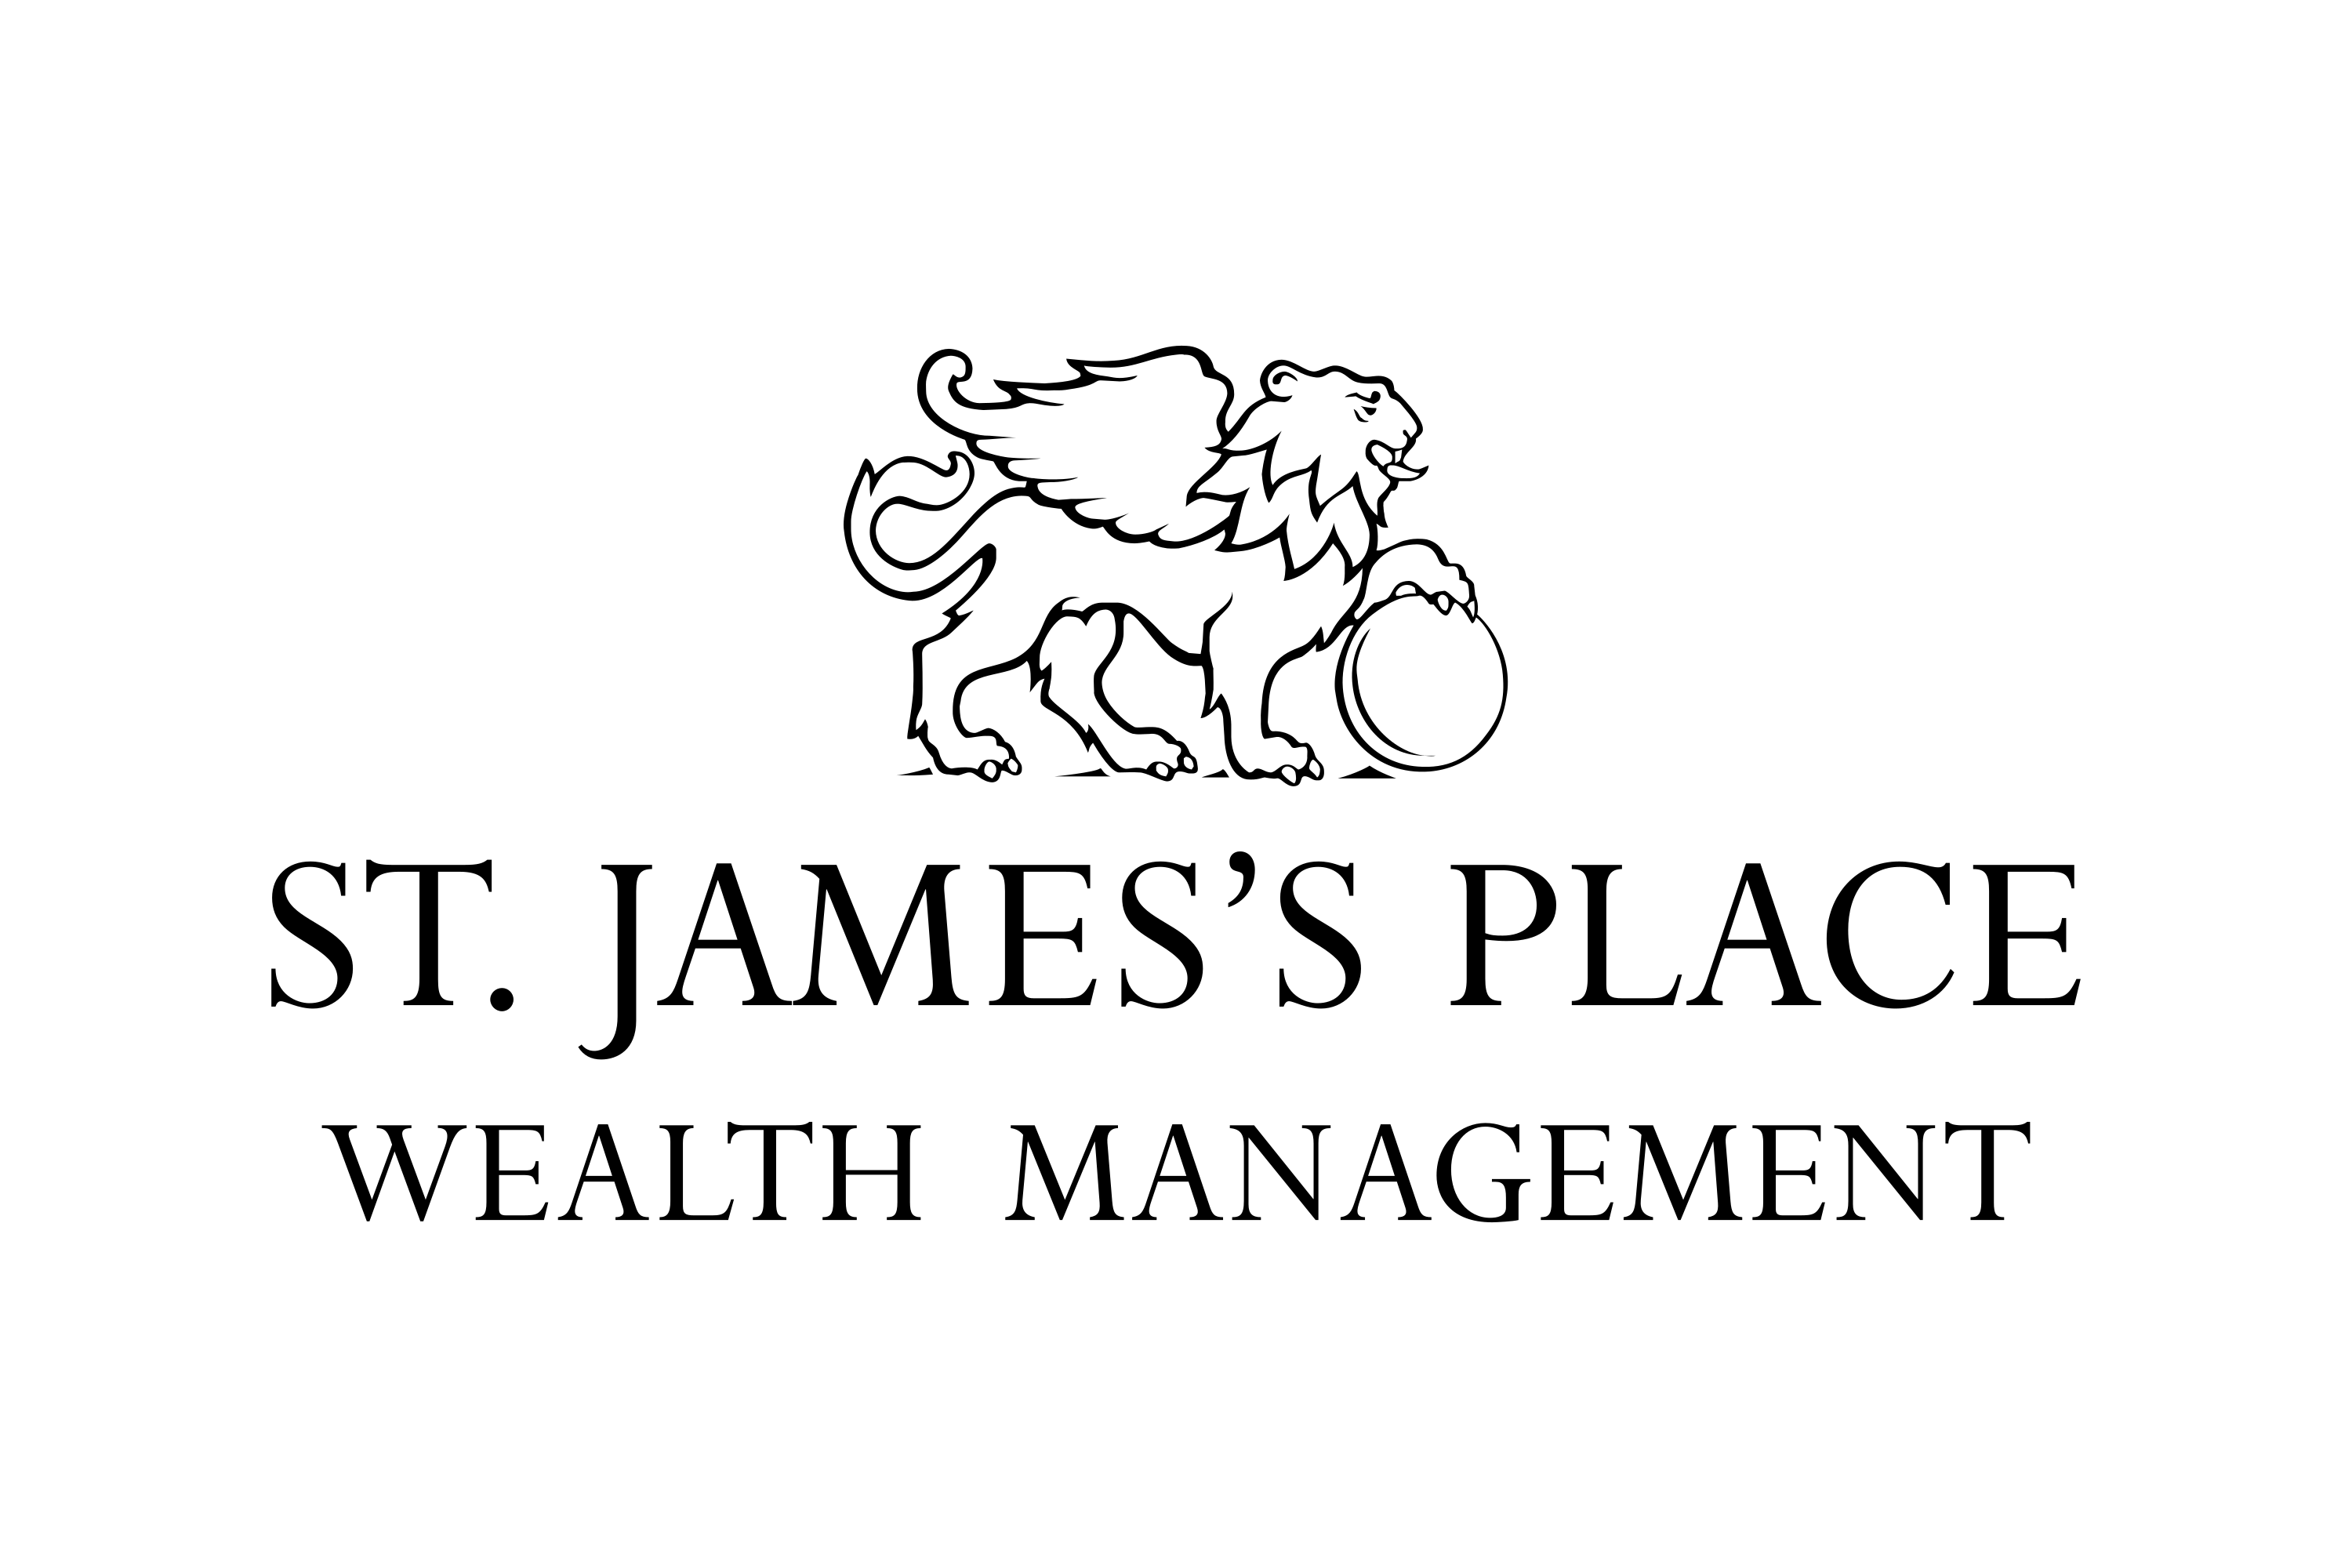 st-james-logo